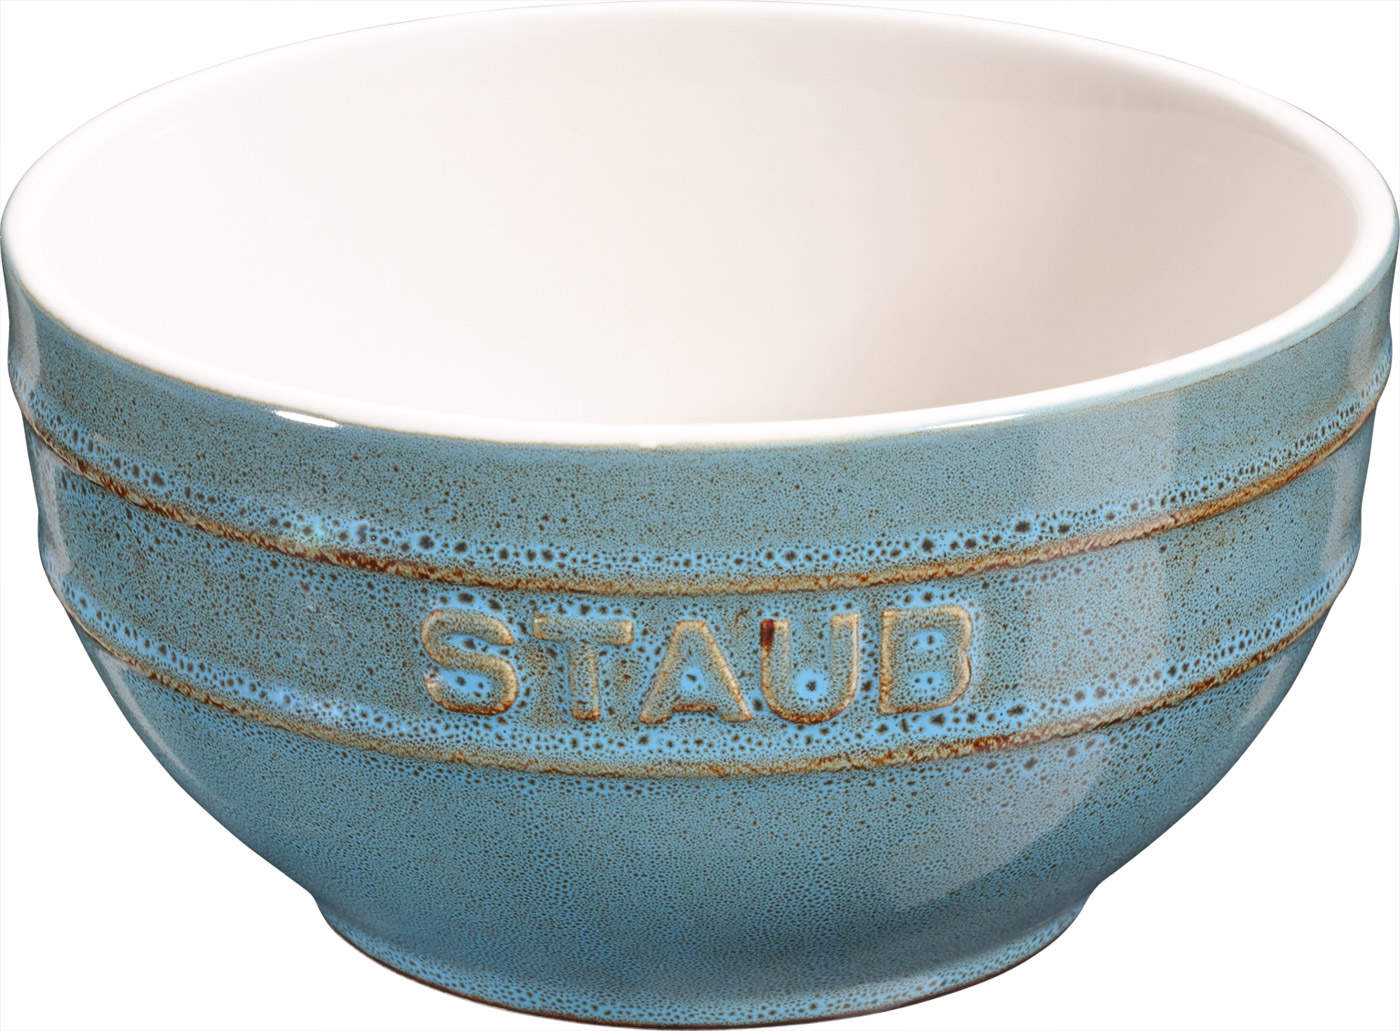 Schüssel, 12 cm, Antik-Türkis, Keramik, Serie: Ceramique. Marke: Staub